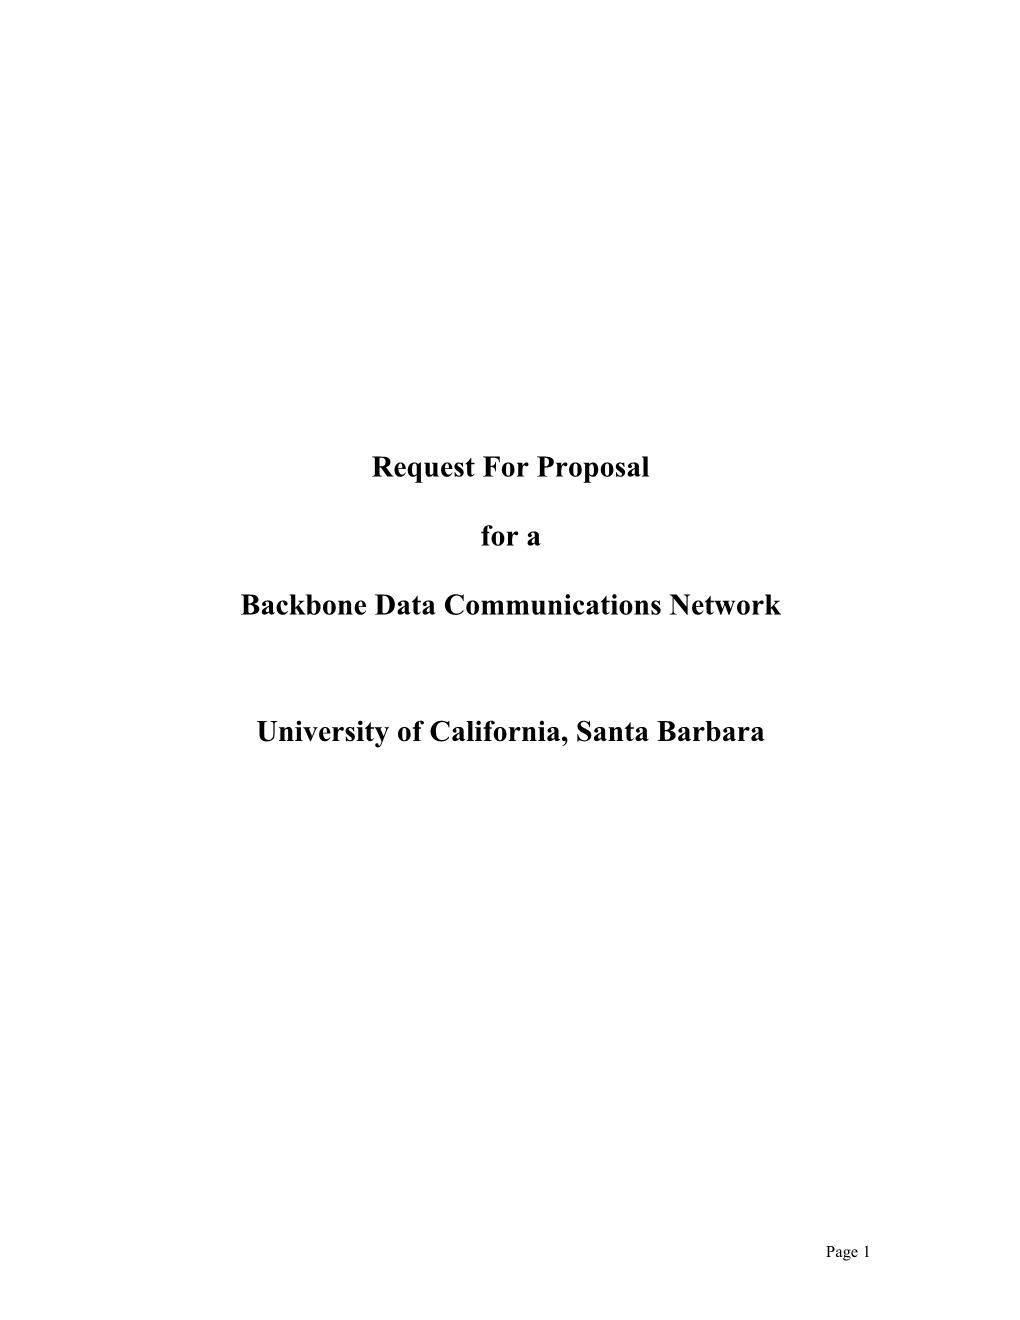 UCSB Backbone Data Communications Network RFP SX-3161